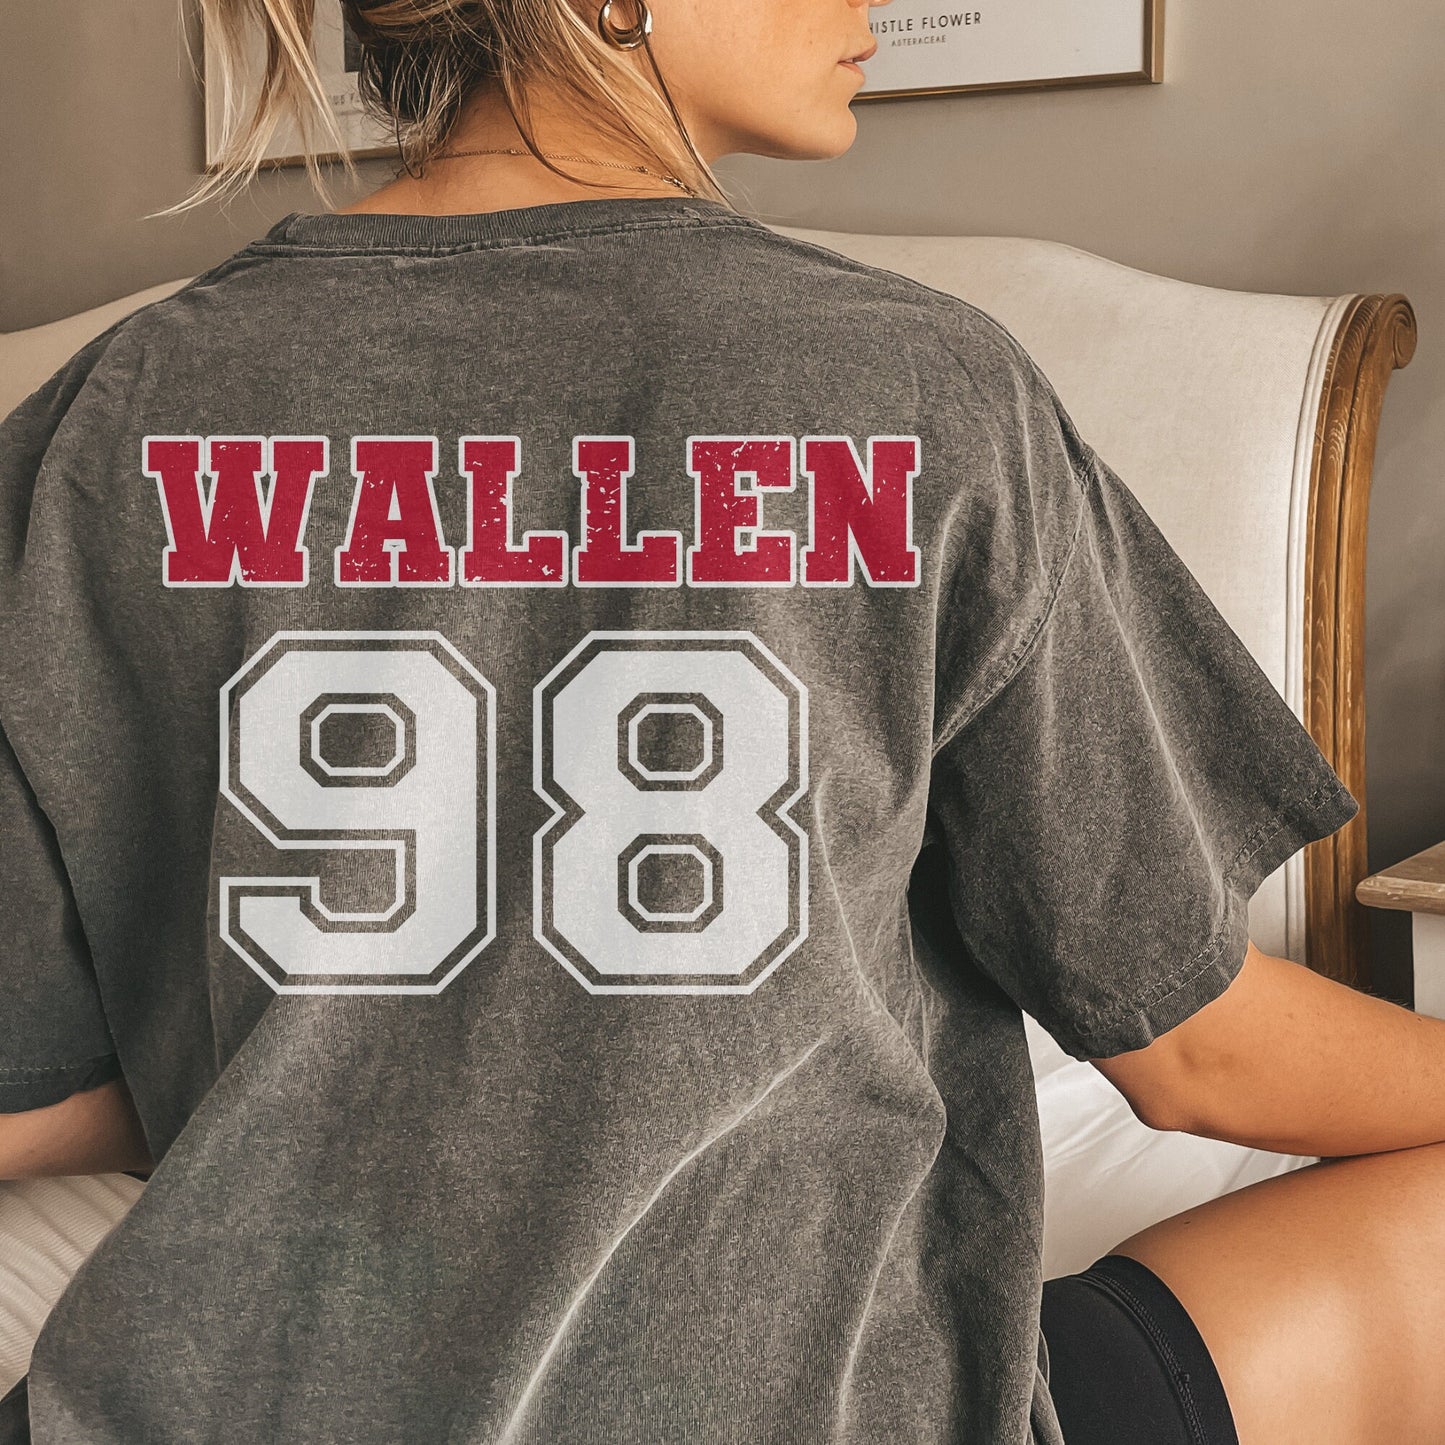 Wallen Shirt, 98 Braves, Wallen shirt for concert, Country music tee, Oversized tshirt dress, vintage western tee, cowboy Wallen